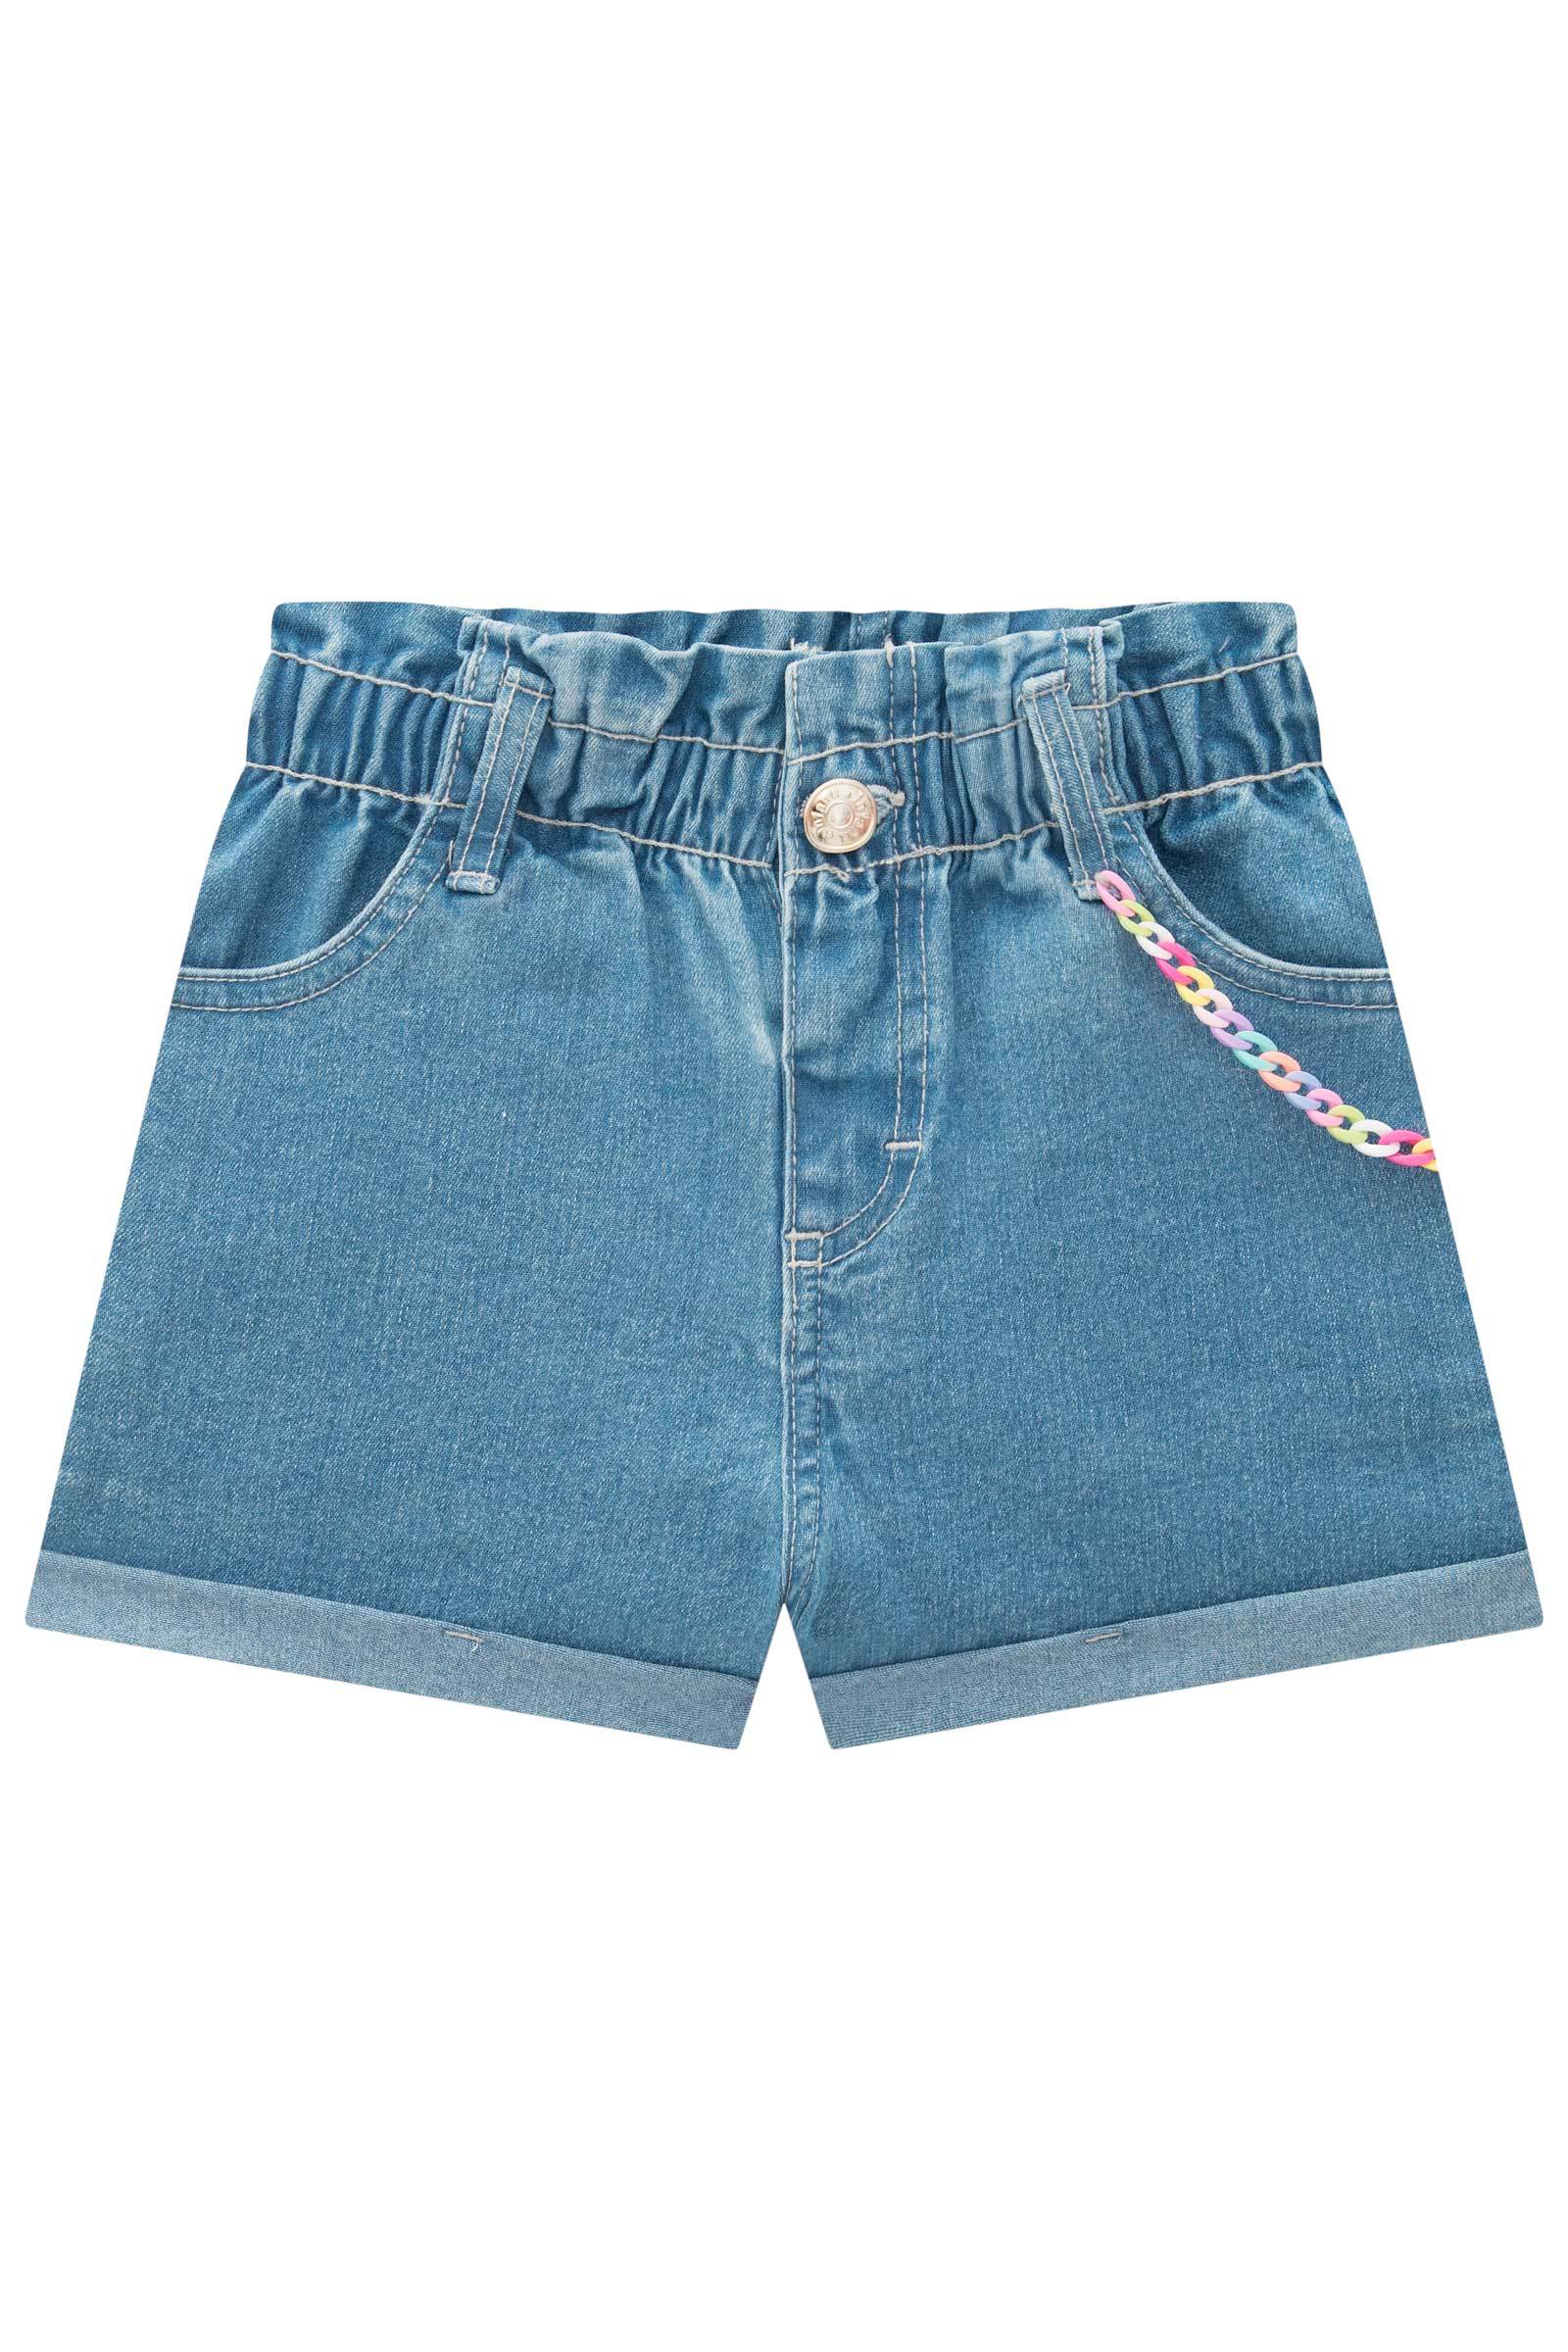 Shorts em Jeans Bellini com Elastano 75682 Infanti